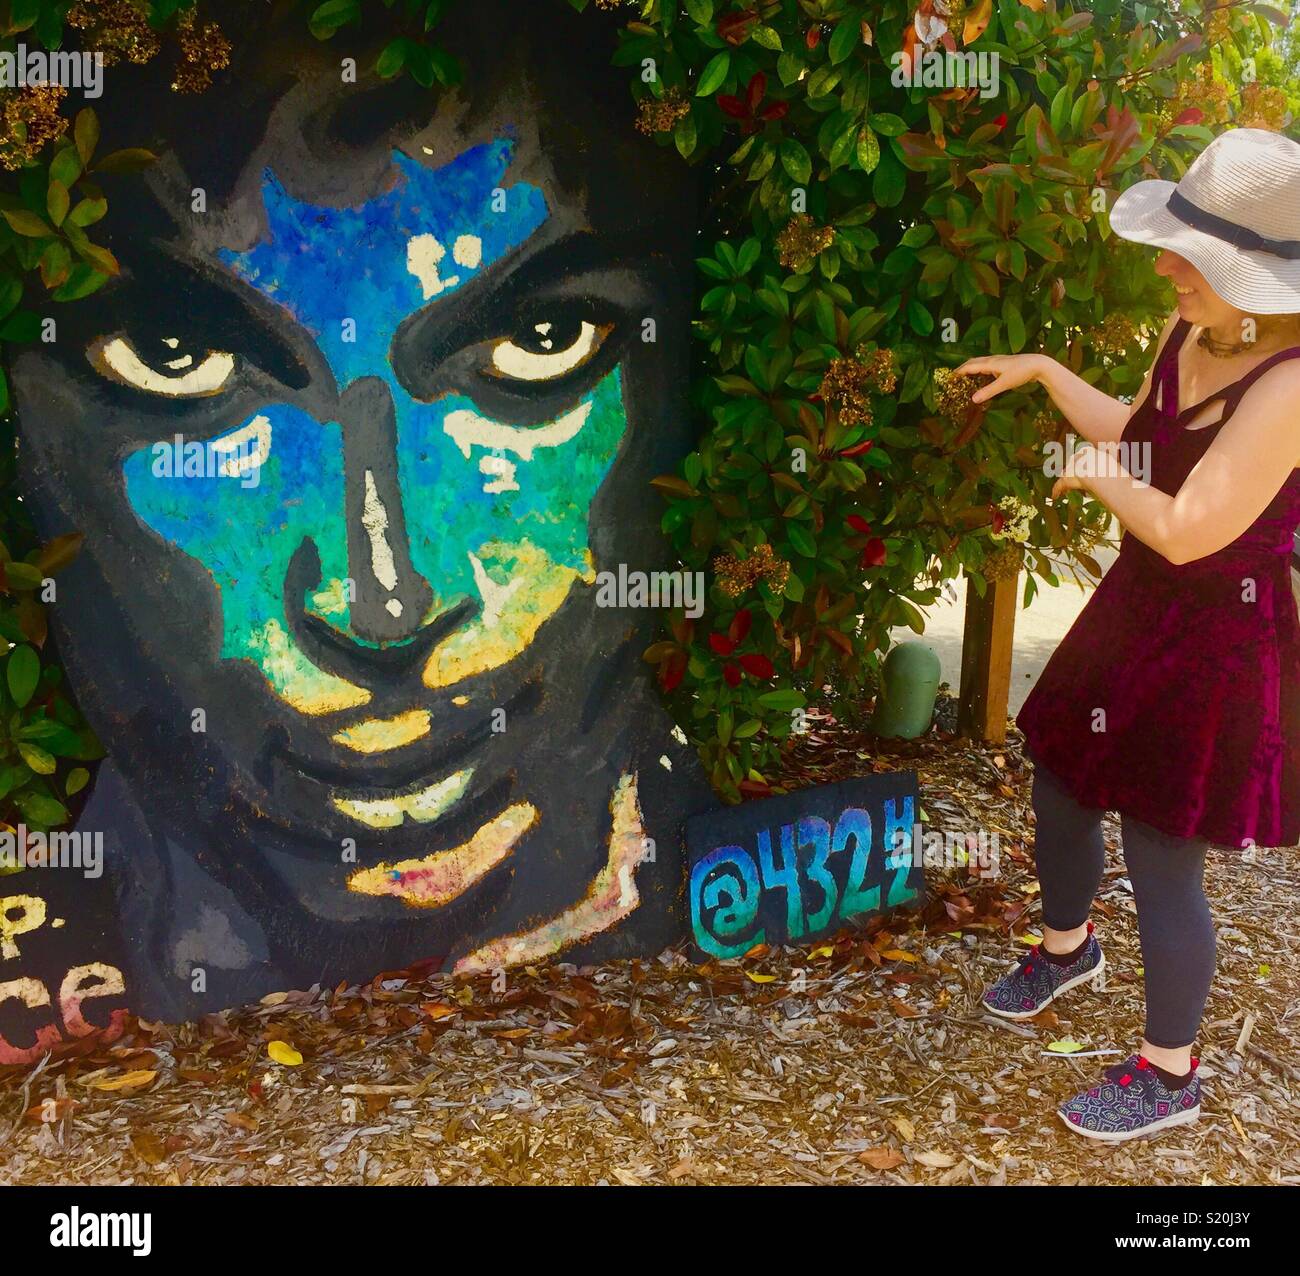 Prince fan enjoying the Prince afro bush in Citrus Heights, California, USA. Stock Photo